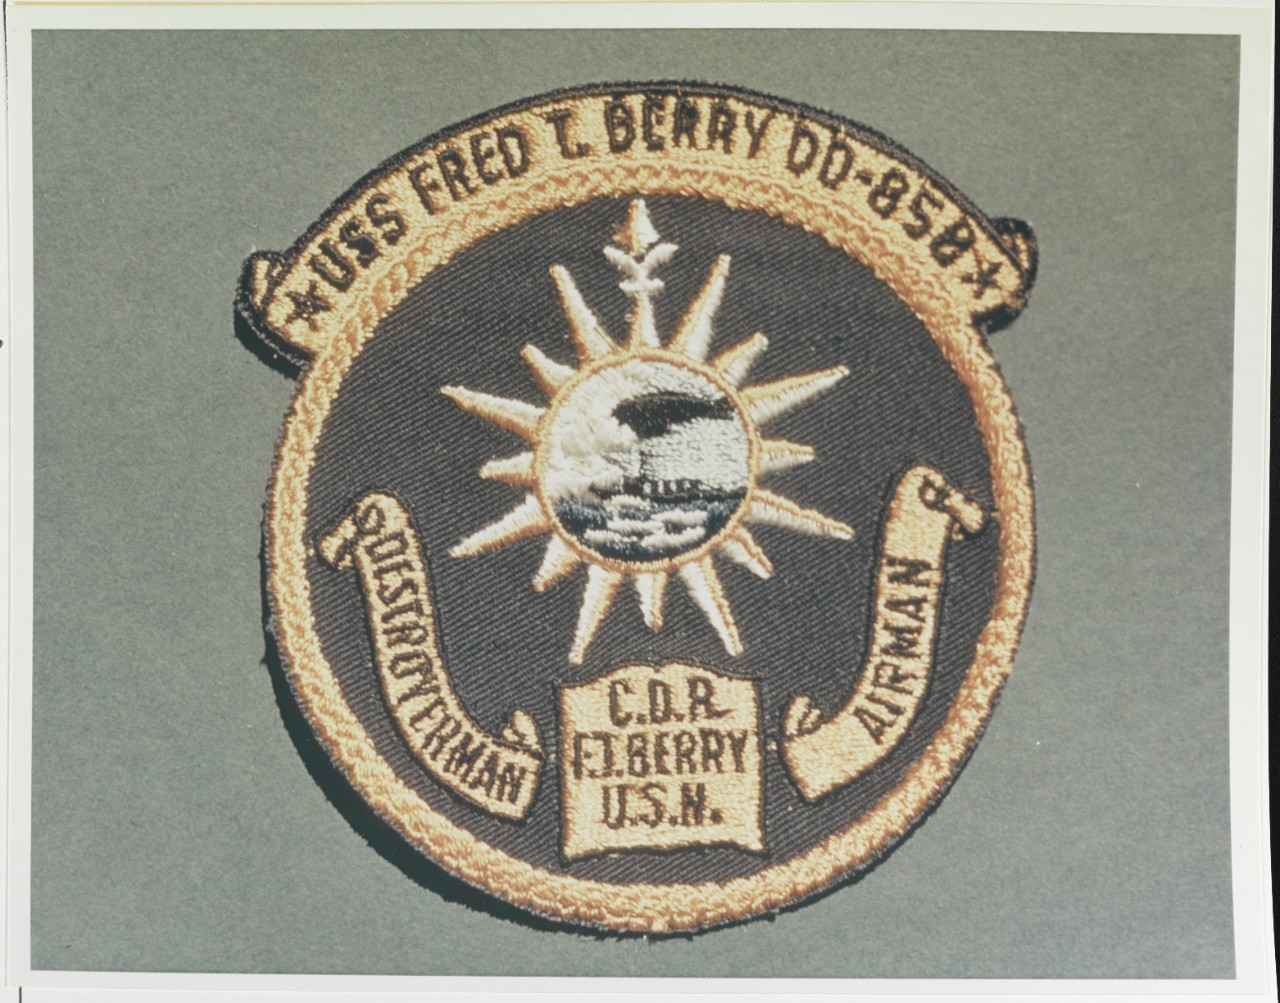 Insignia: USS FRED T. BERRY (DD-858)